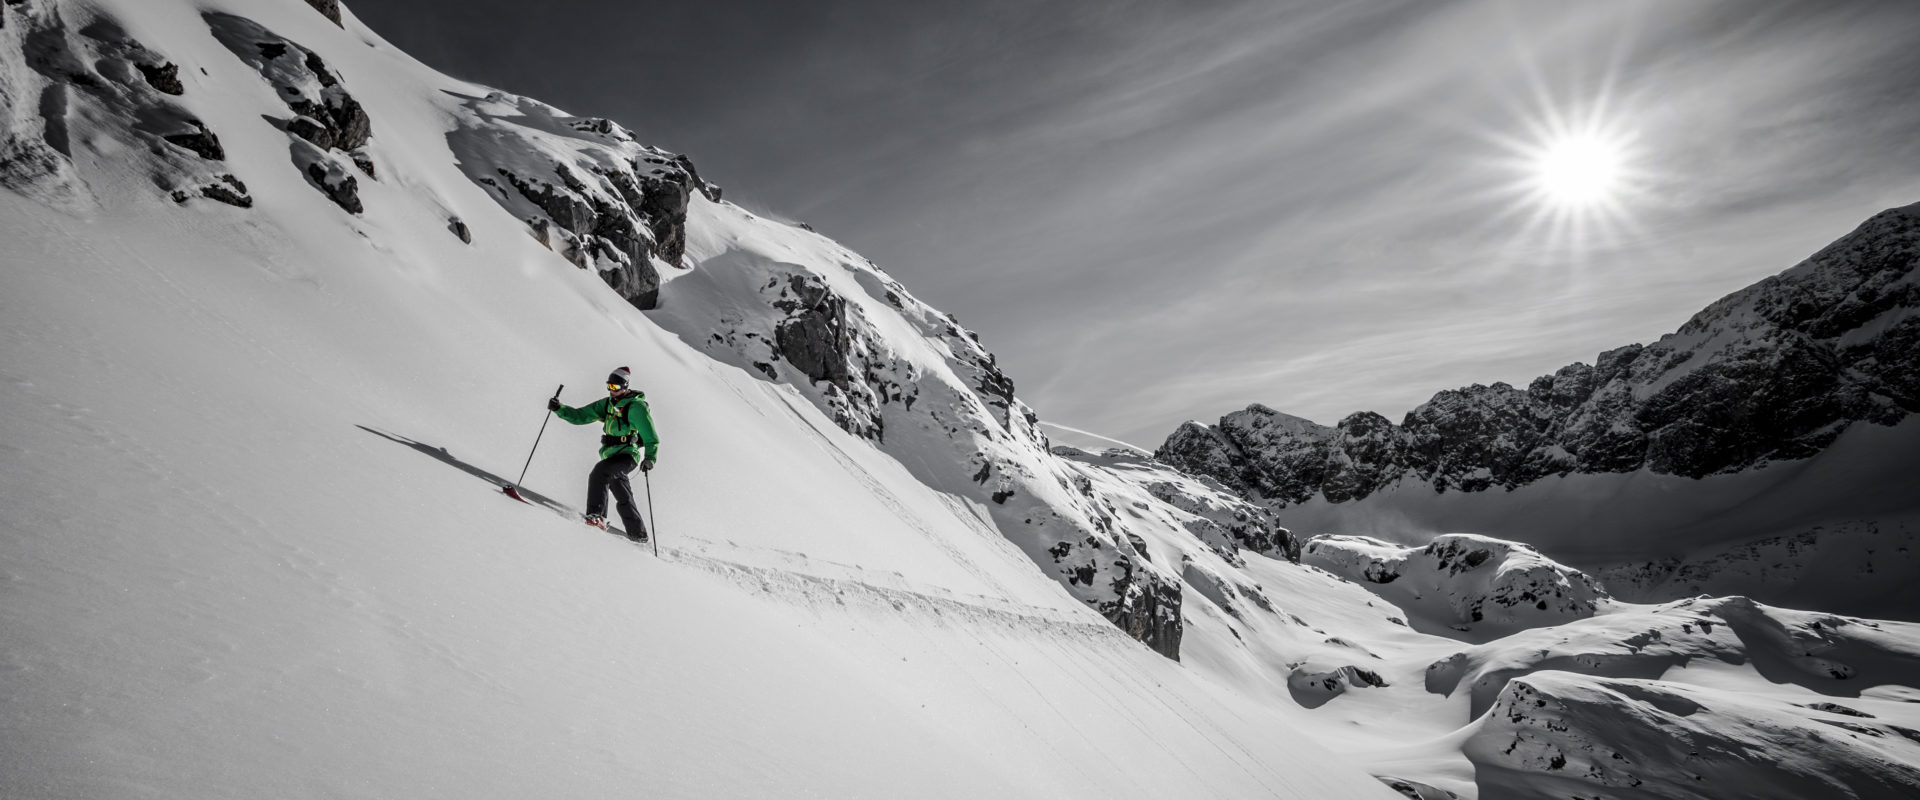 skitouren paradies am arlberg